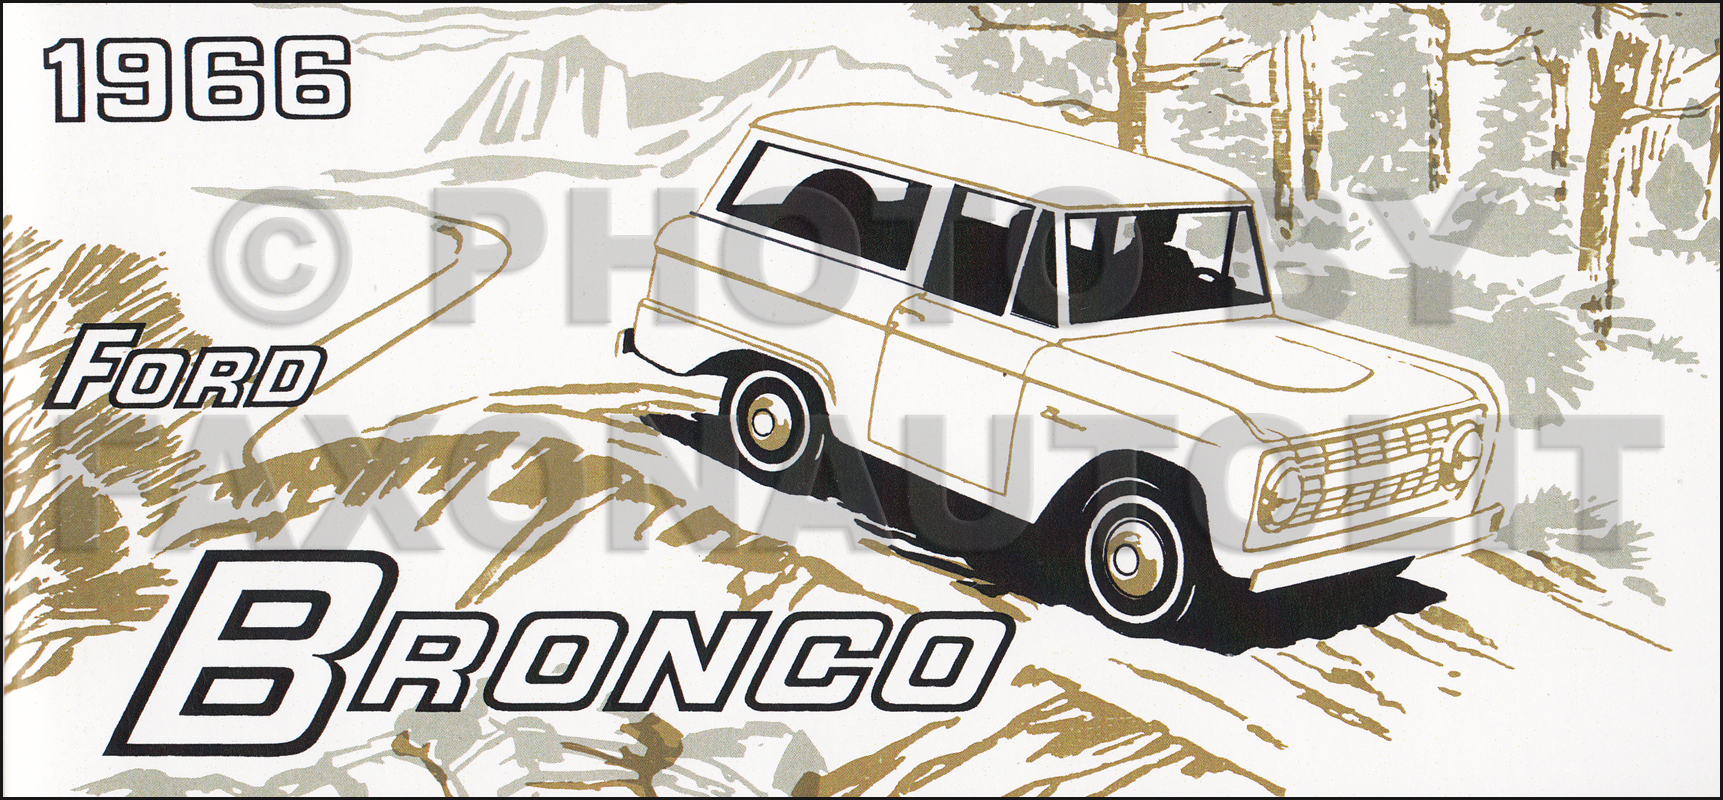 1966 Ford Bronco Owner's Manual Reprint